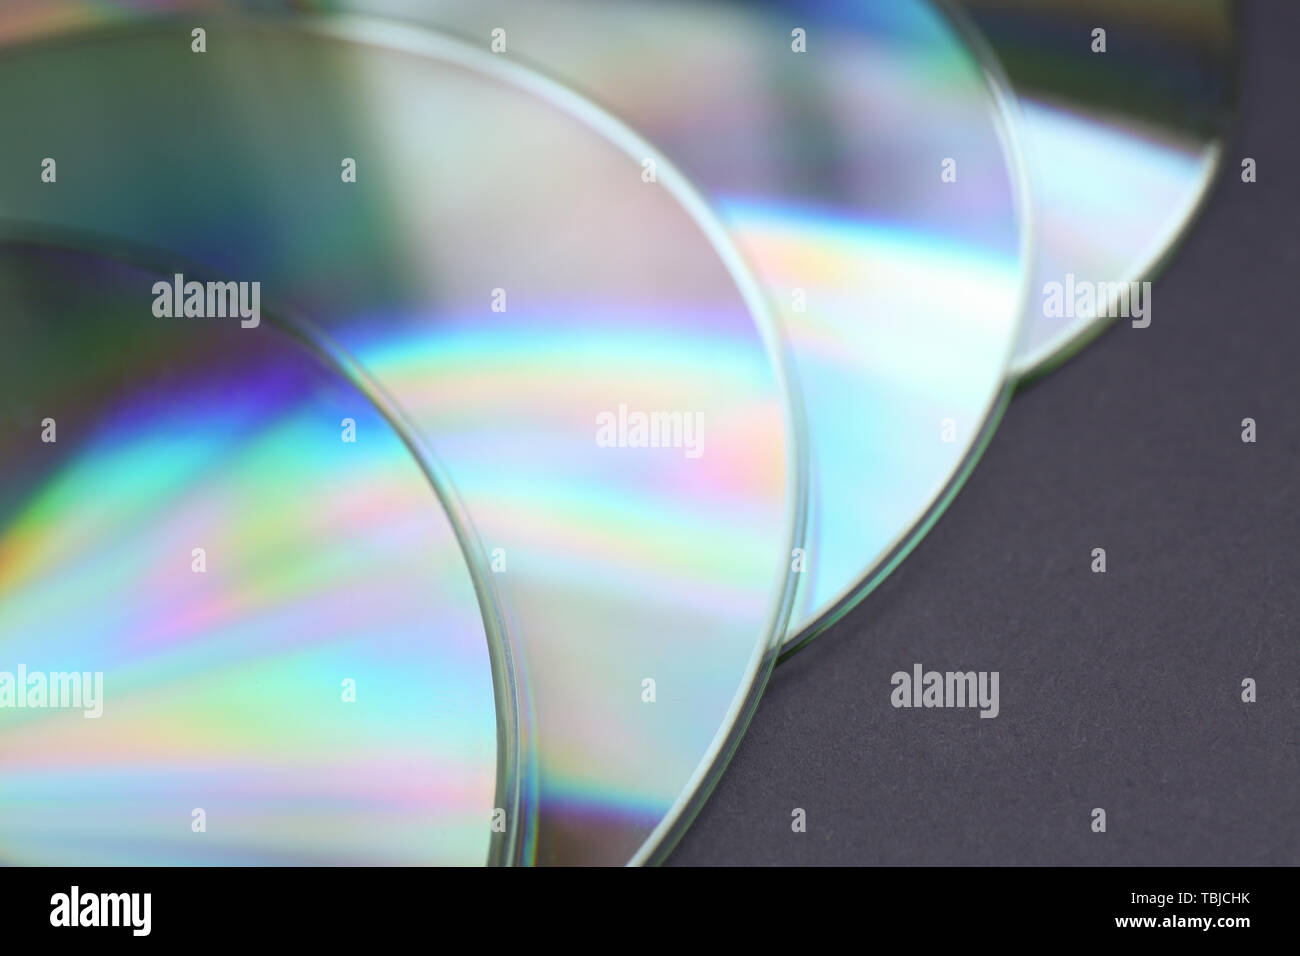 Shiny compact disks on dark background, closeup Stock Photo